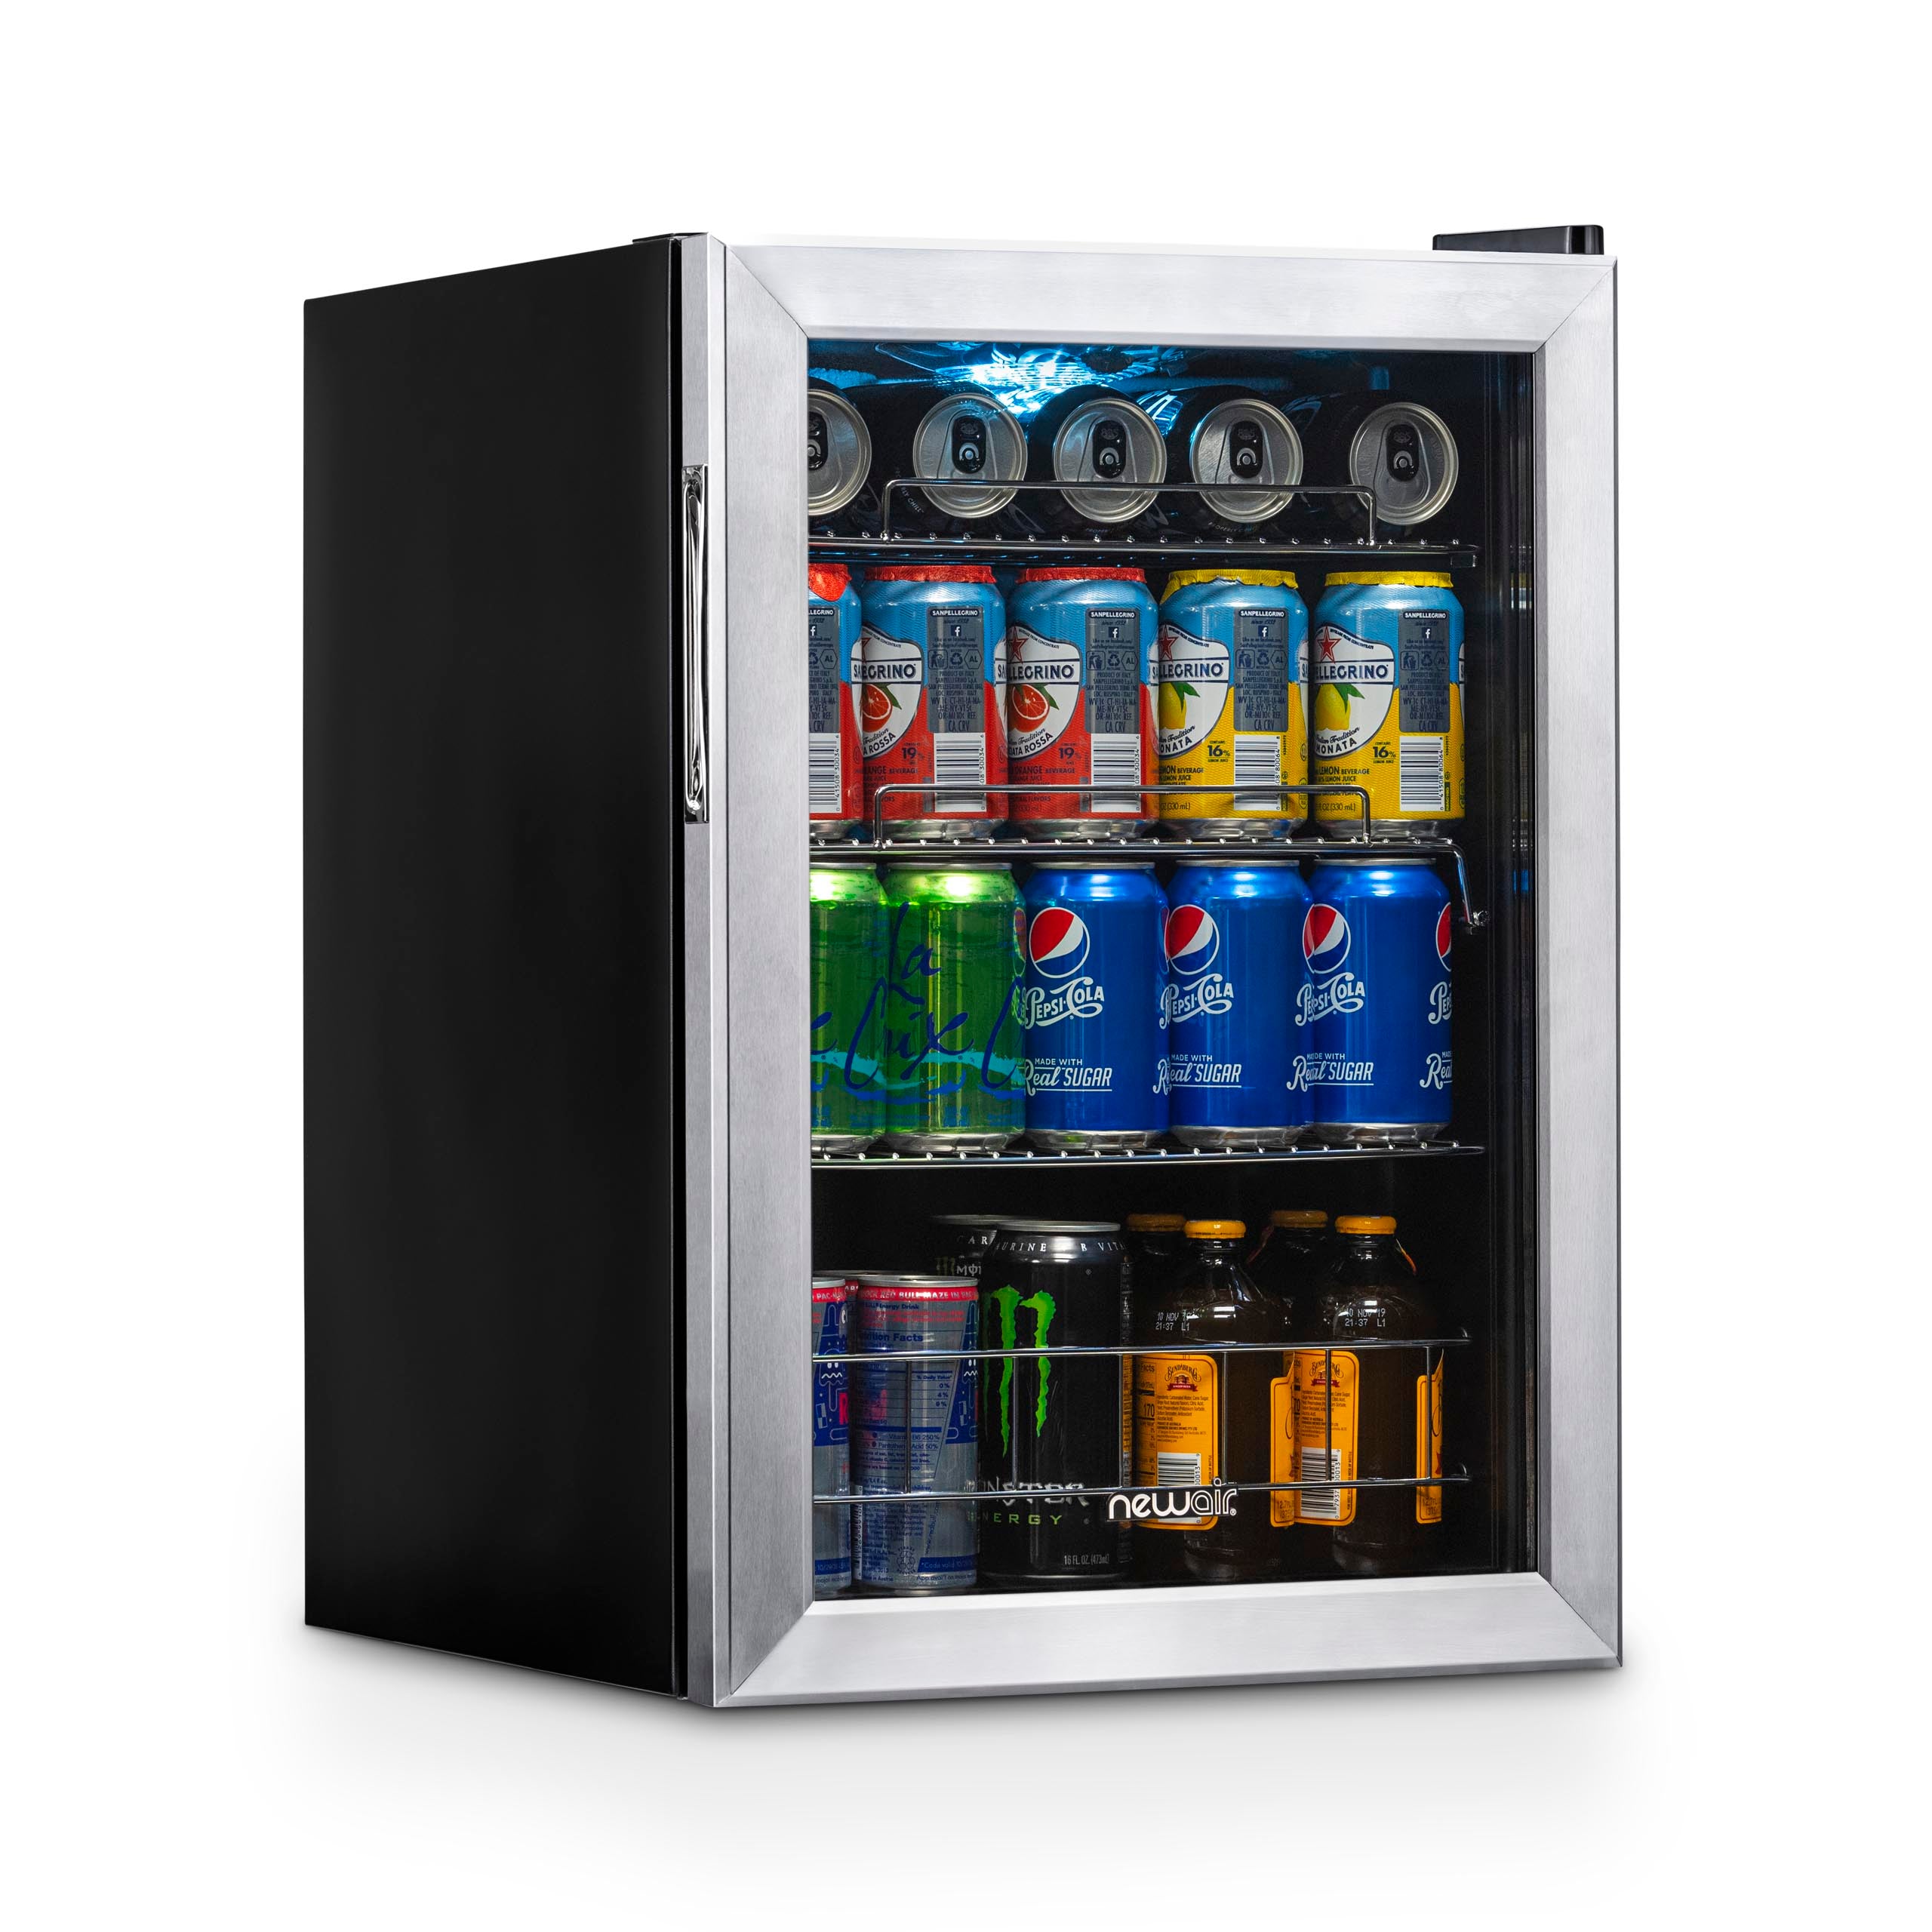 Newair 60 Can Beverage Cooler in Black